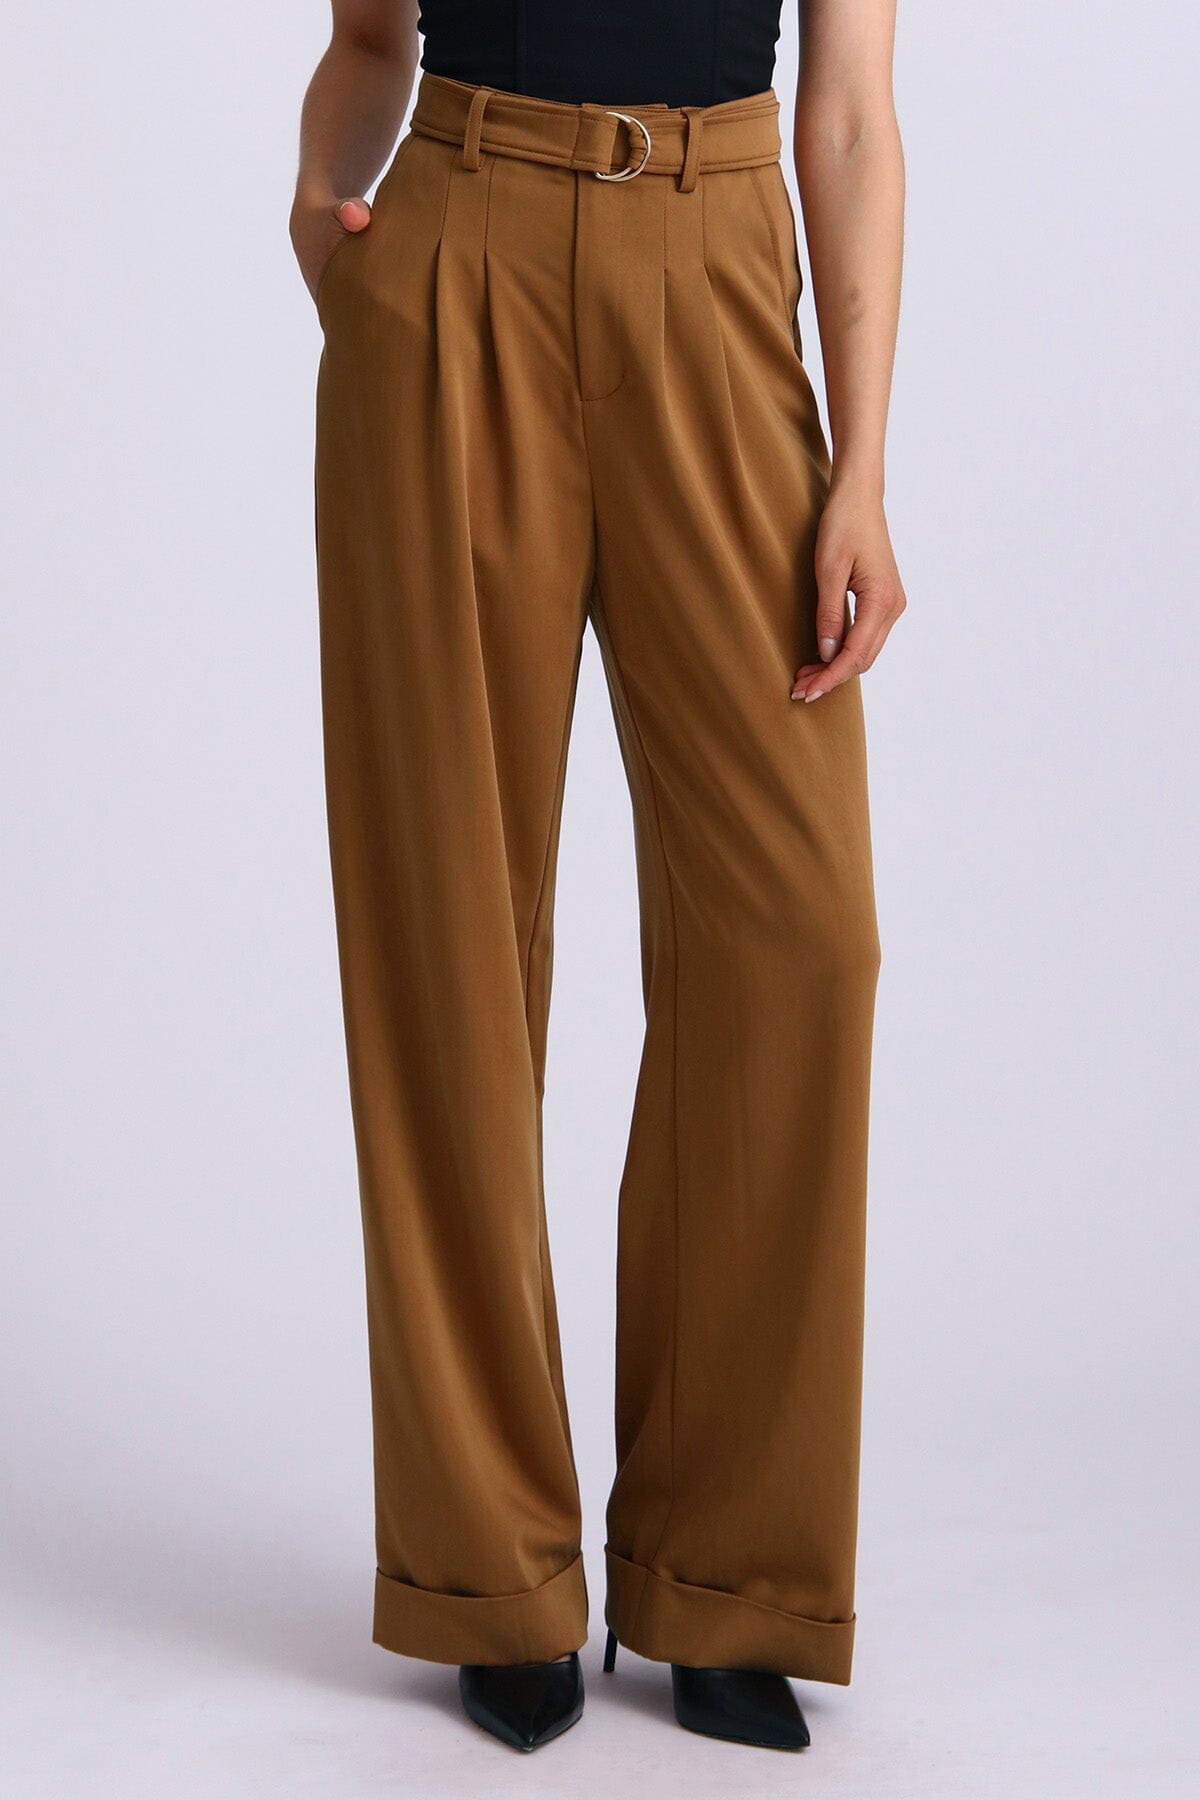 Amber brown lyocell blend belted wide leg trouser pant - figure flattering women's high waist trousers for fall